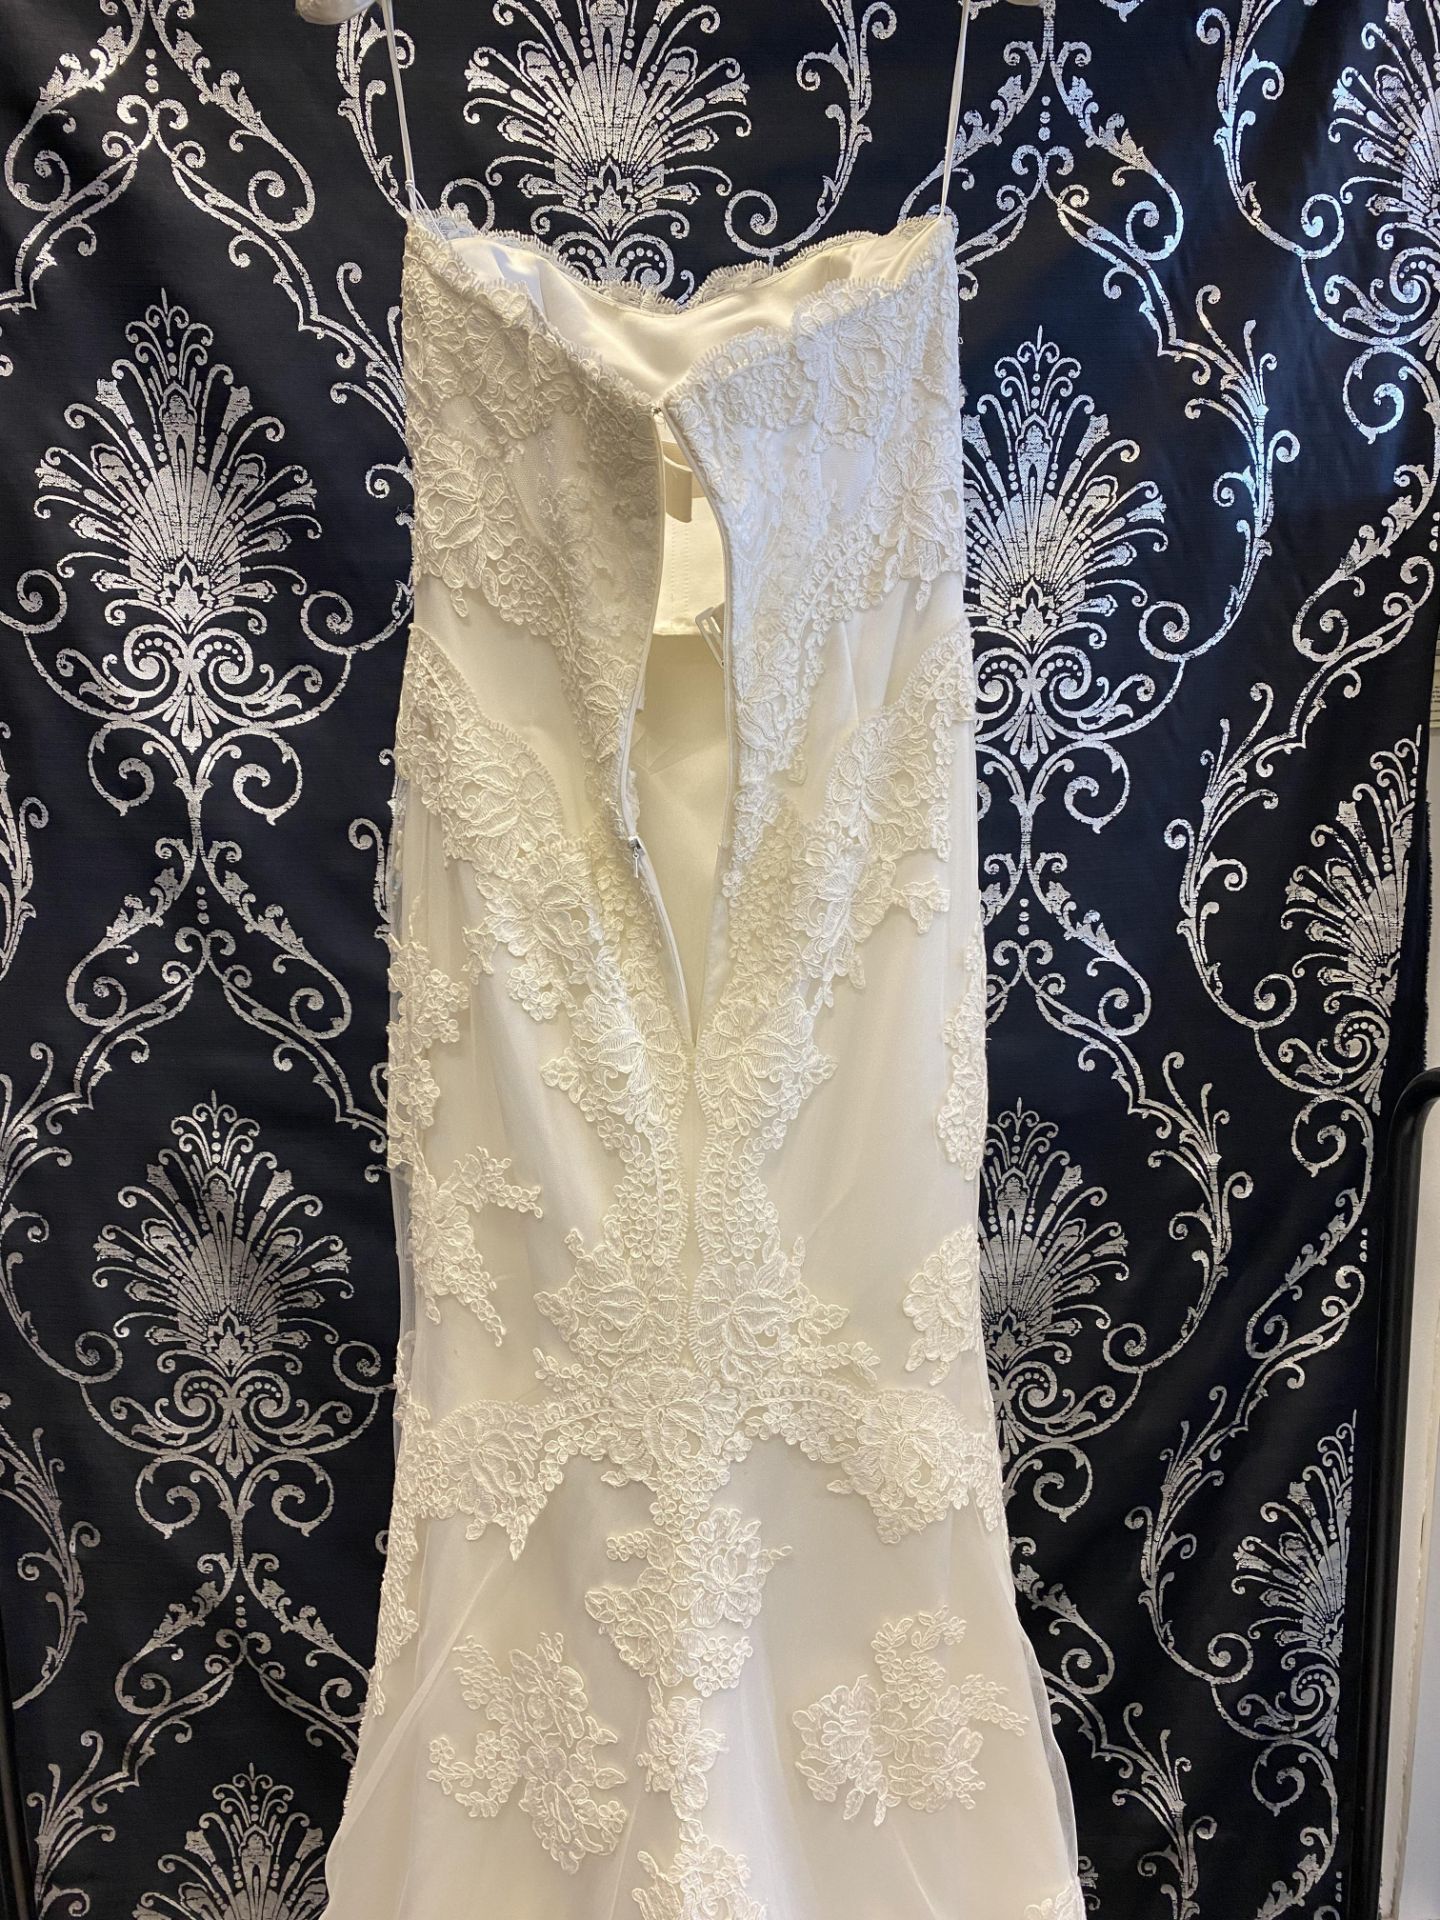 1 x LUSAN MANDONGUS 'Valli' Stunning Strapless Lace Overlay Designer Wedding Dress RRP £1,575 UK10 - Image 2 of 9